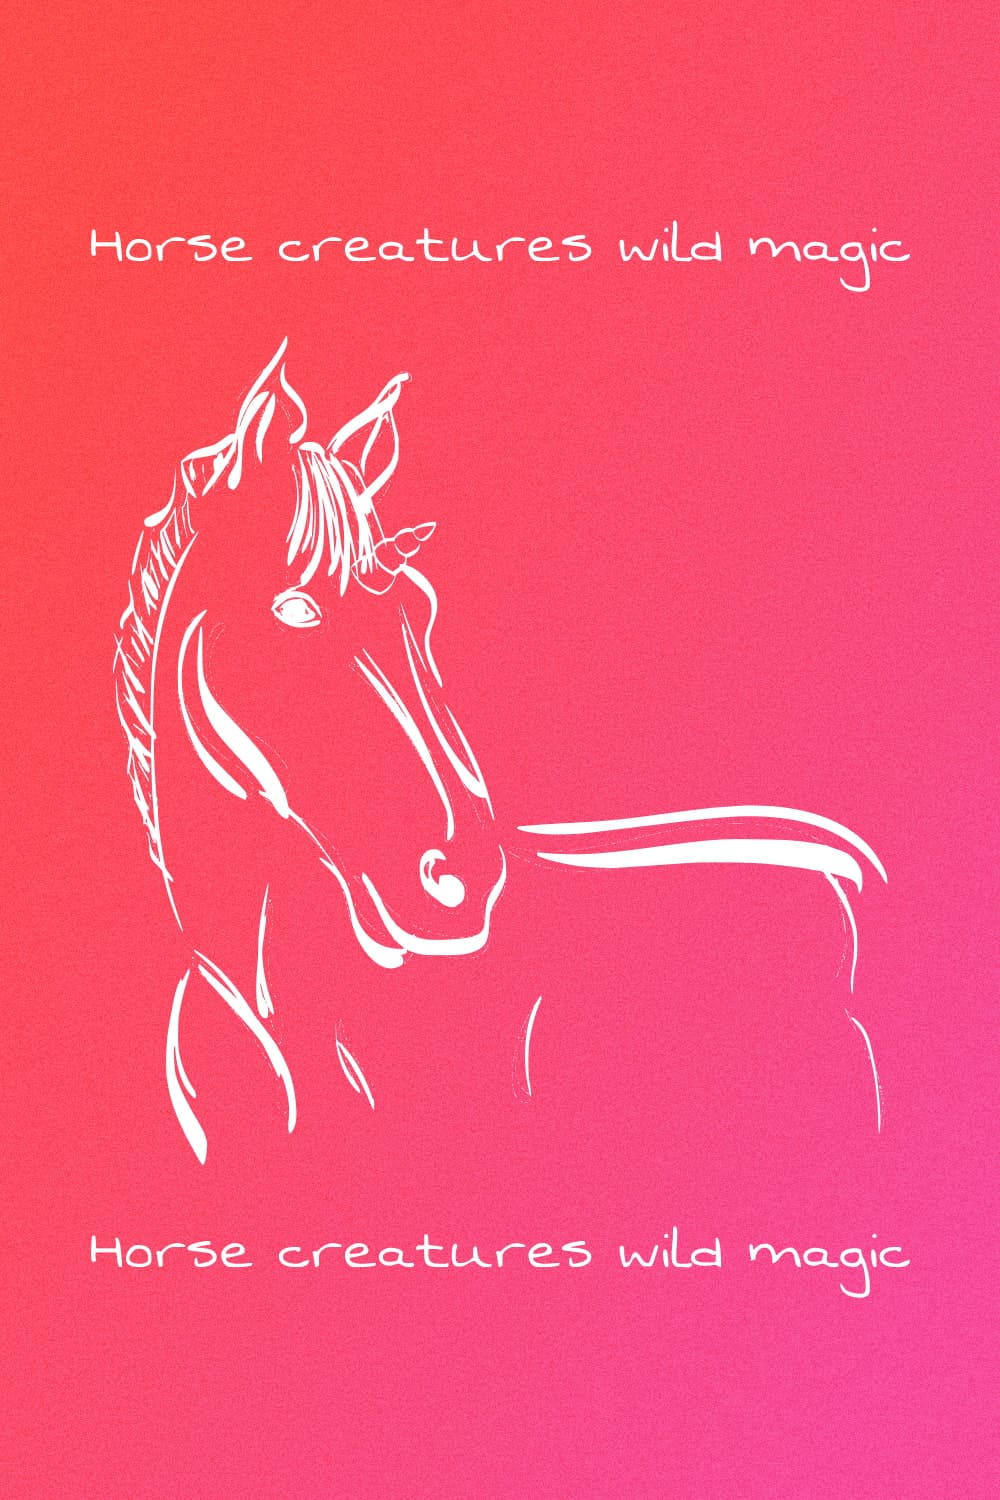 Animal Horn Rainbow Horse - Pinterest Image.